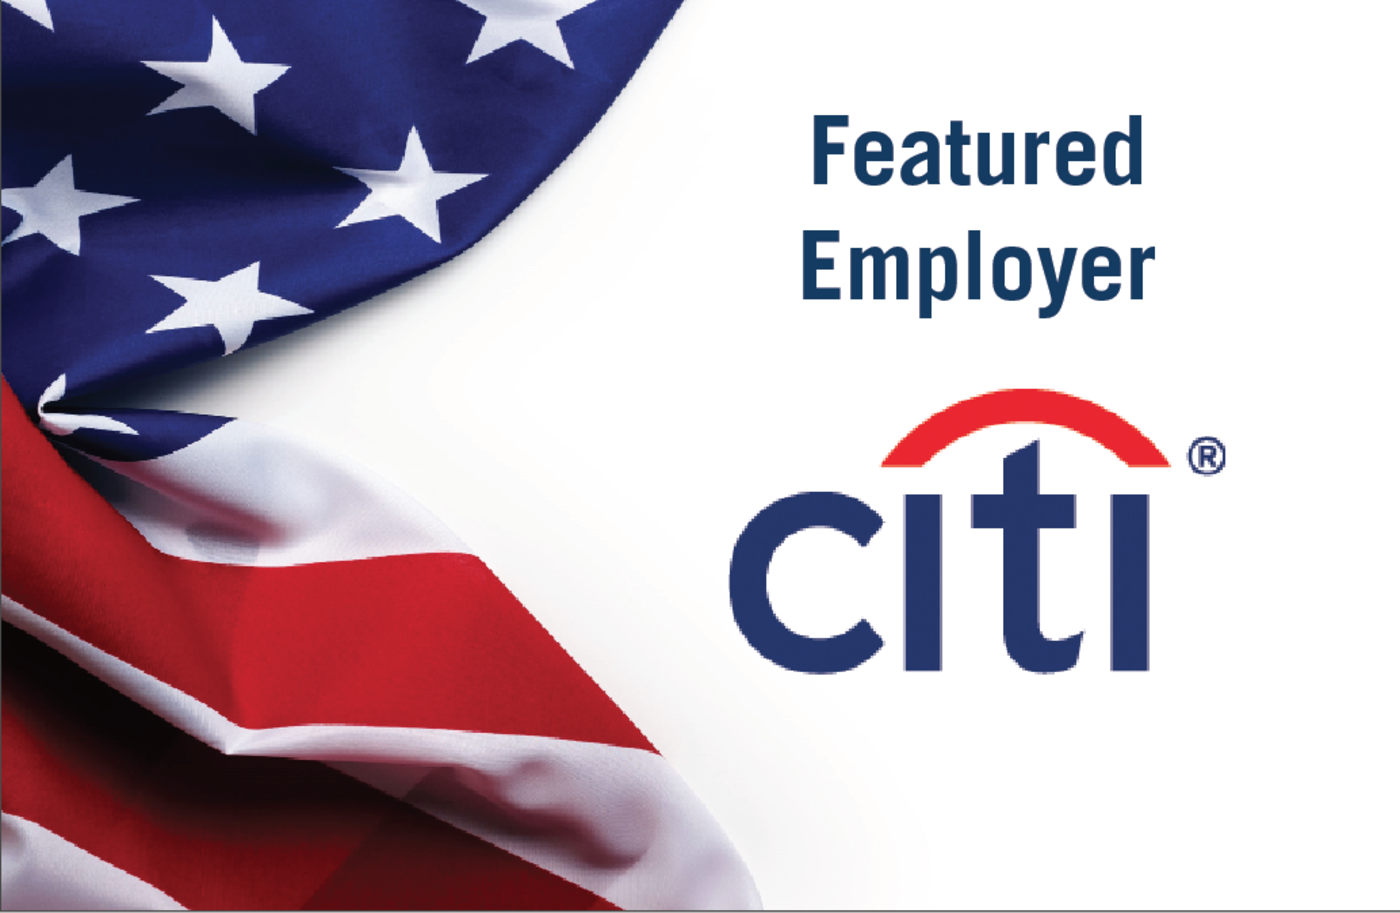 Citi featured employer